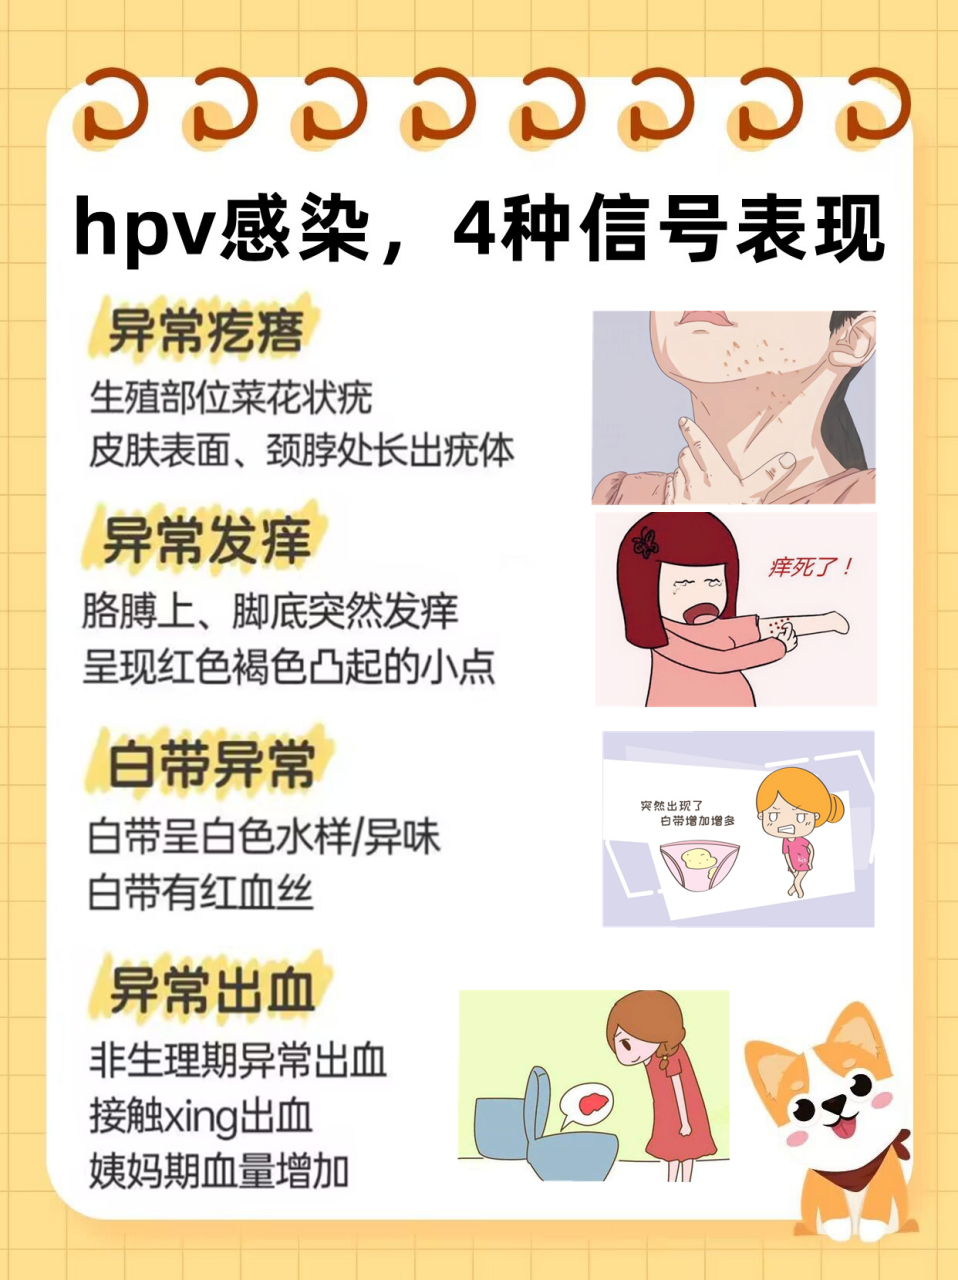 hpv有什么表现症状hvp图片